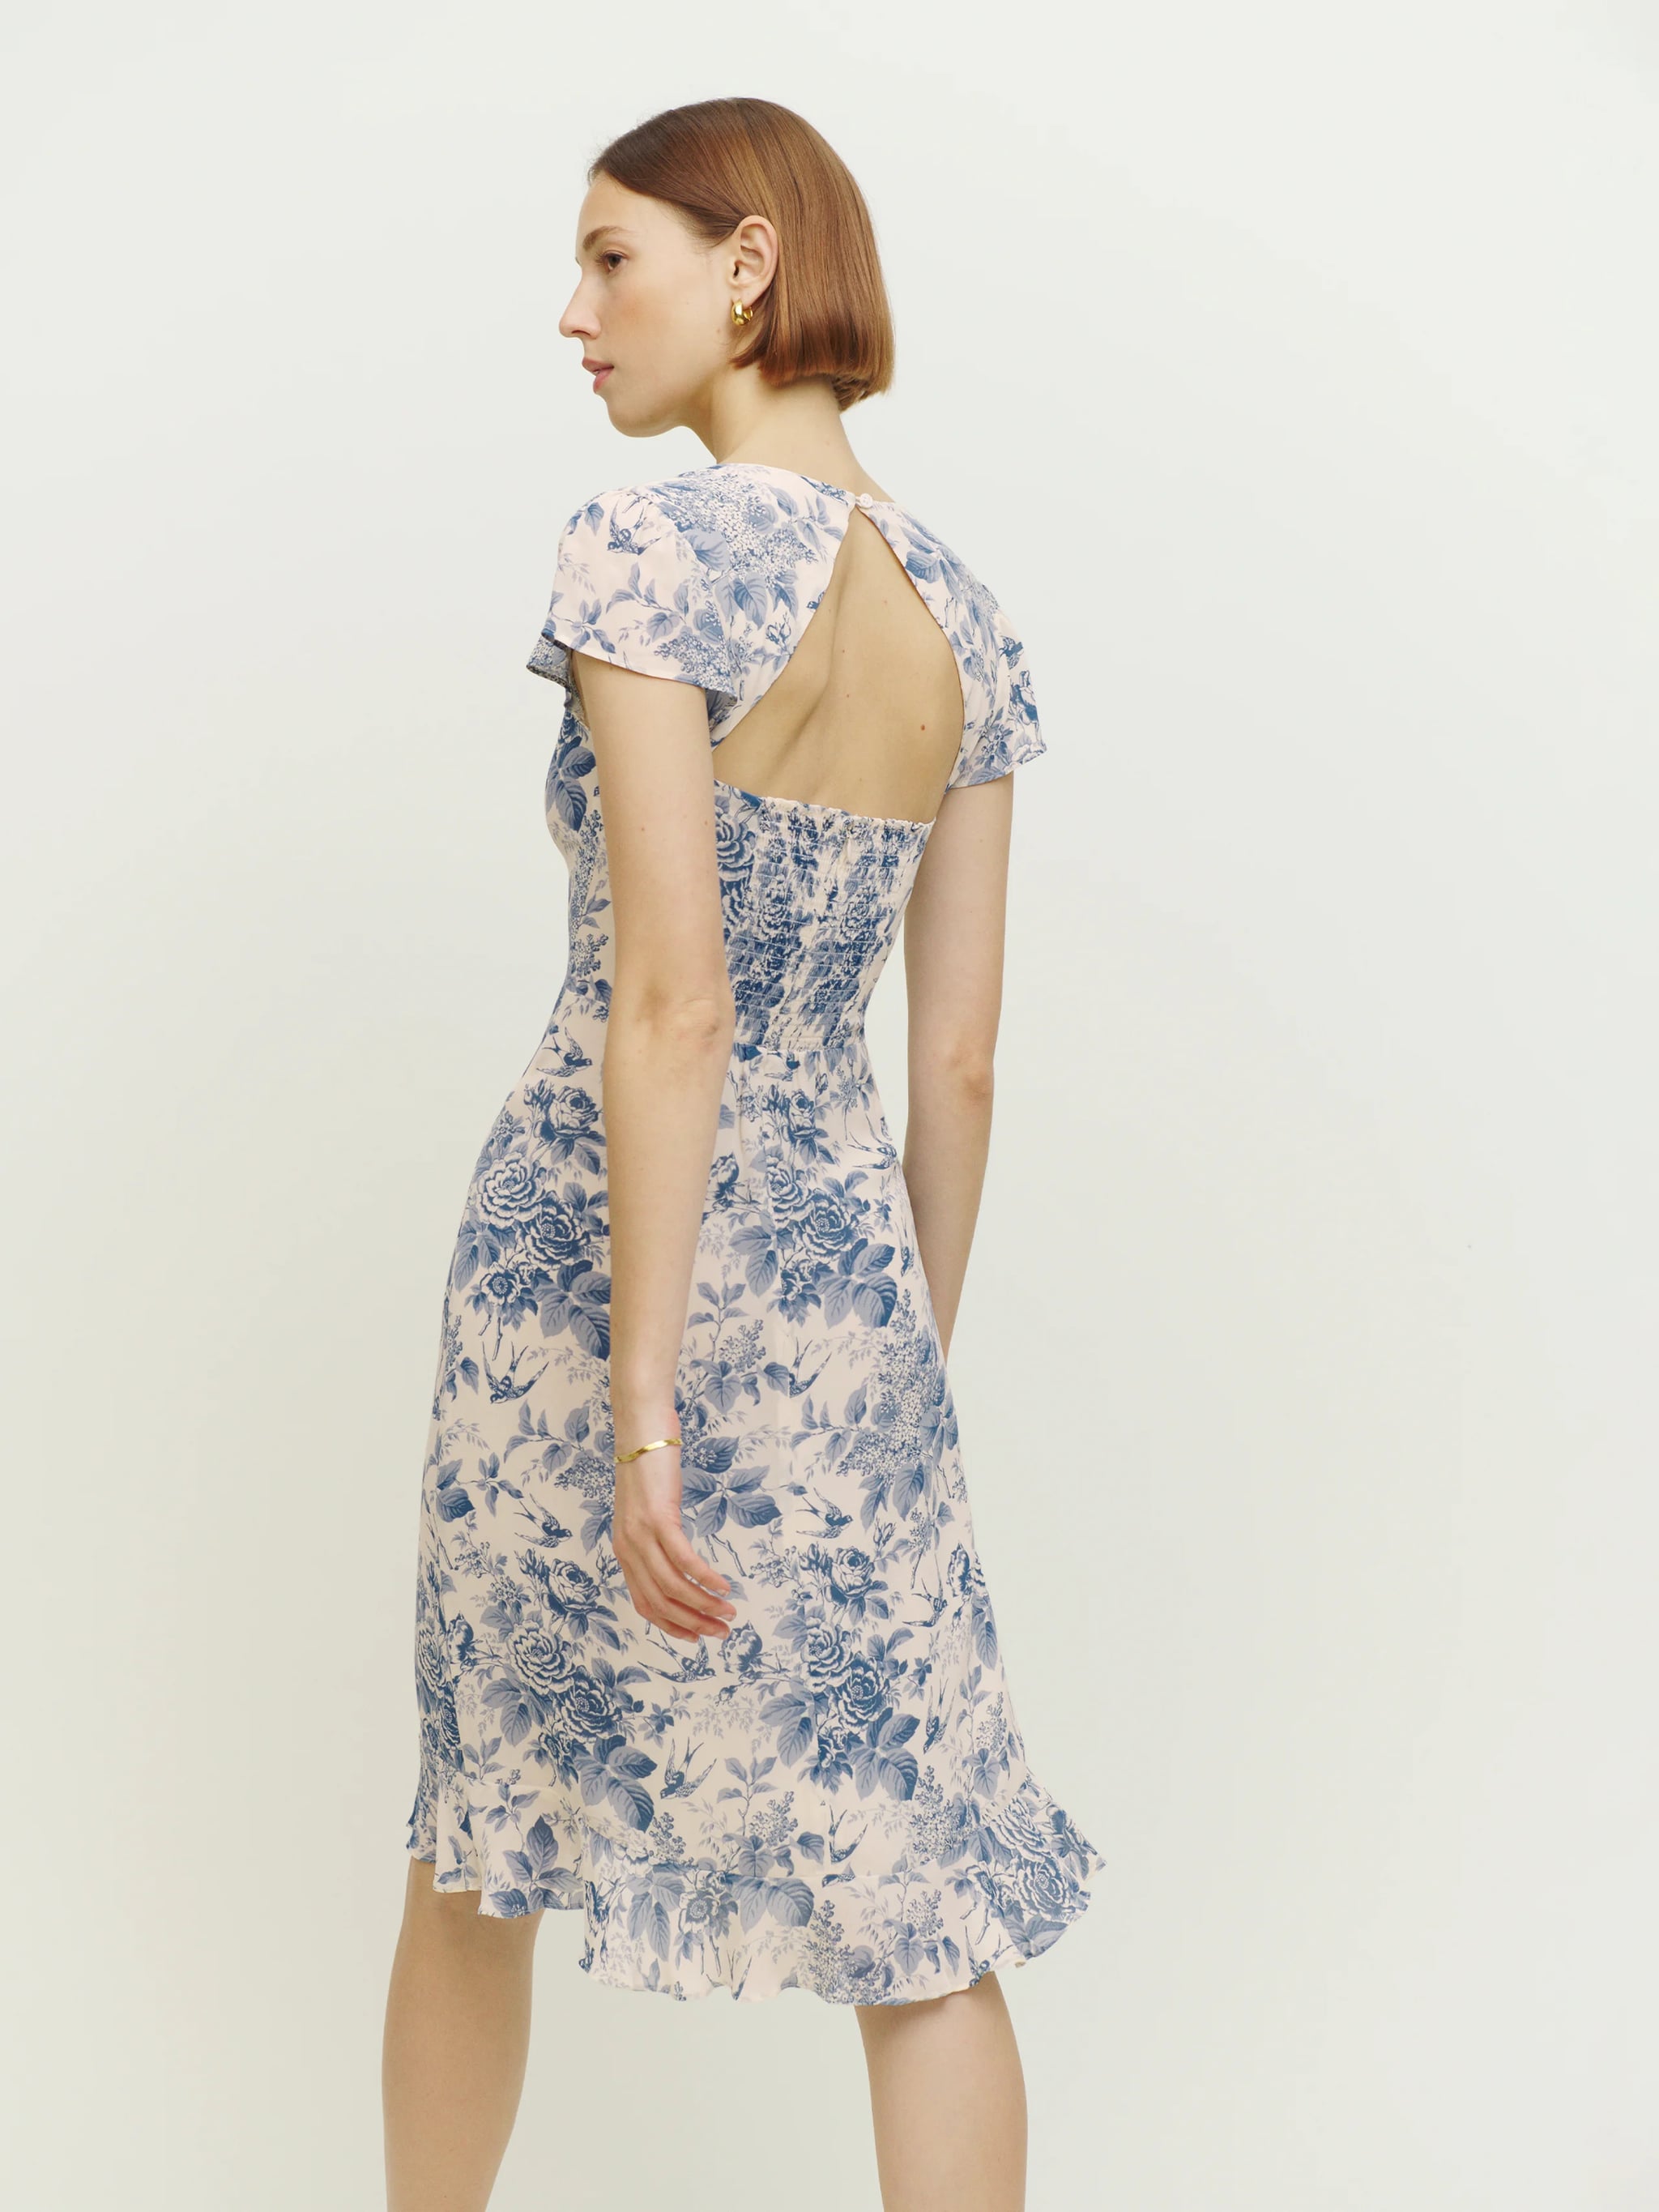 Beef: Shop Ashley Park's Floral Reformation Dress